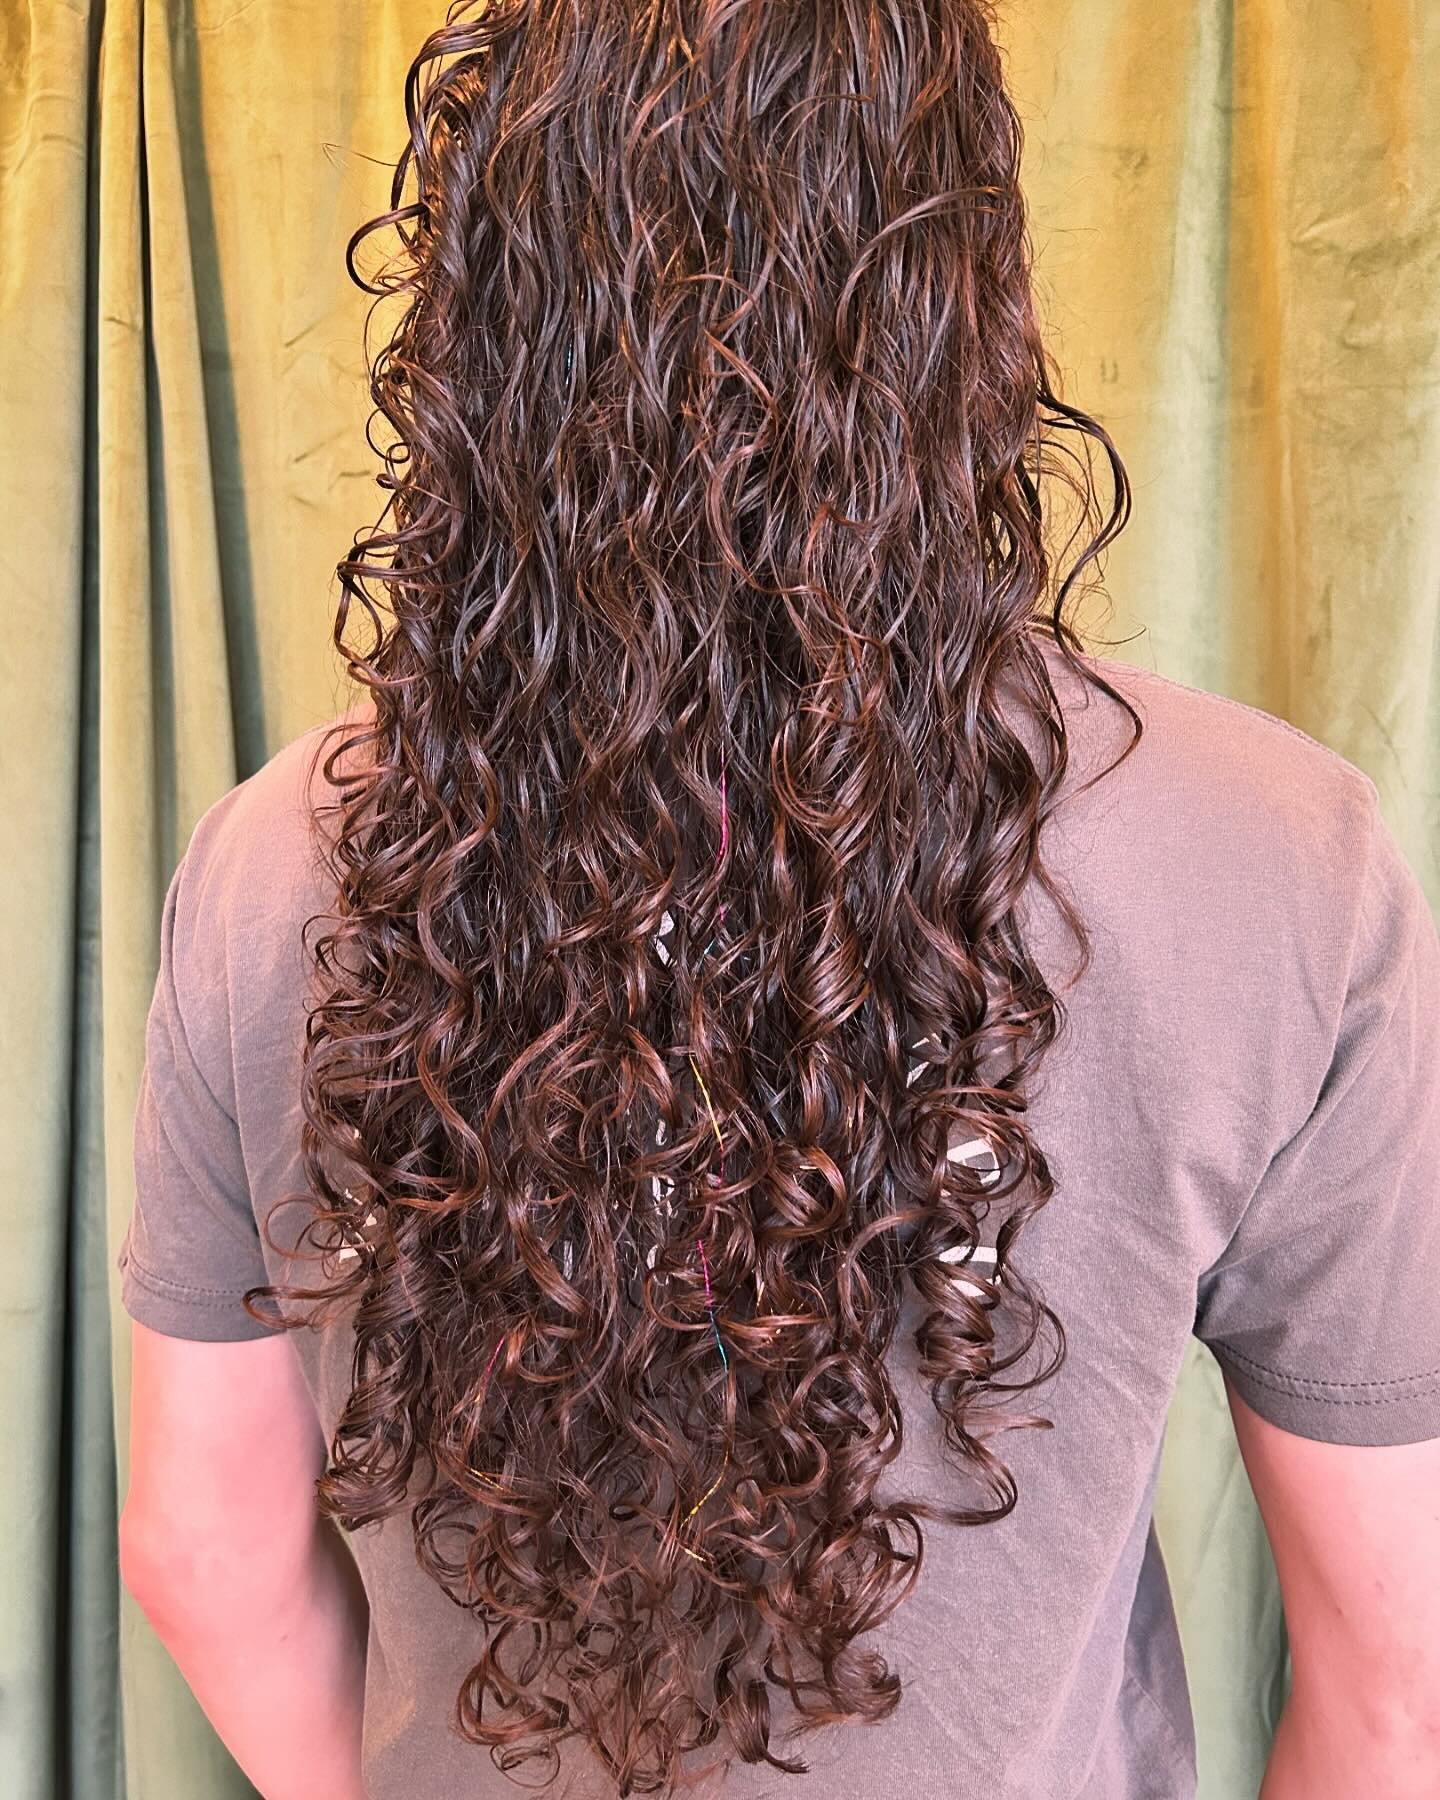 Those curls tho 😍🤤 Long Curly Haircut ✨